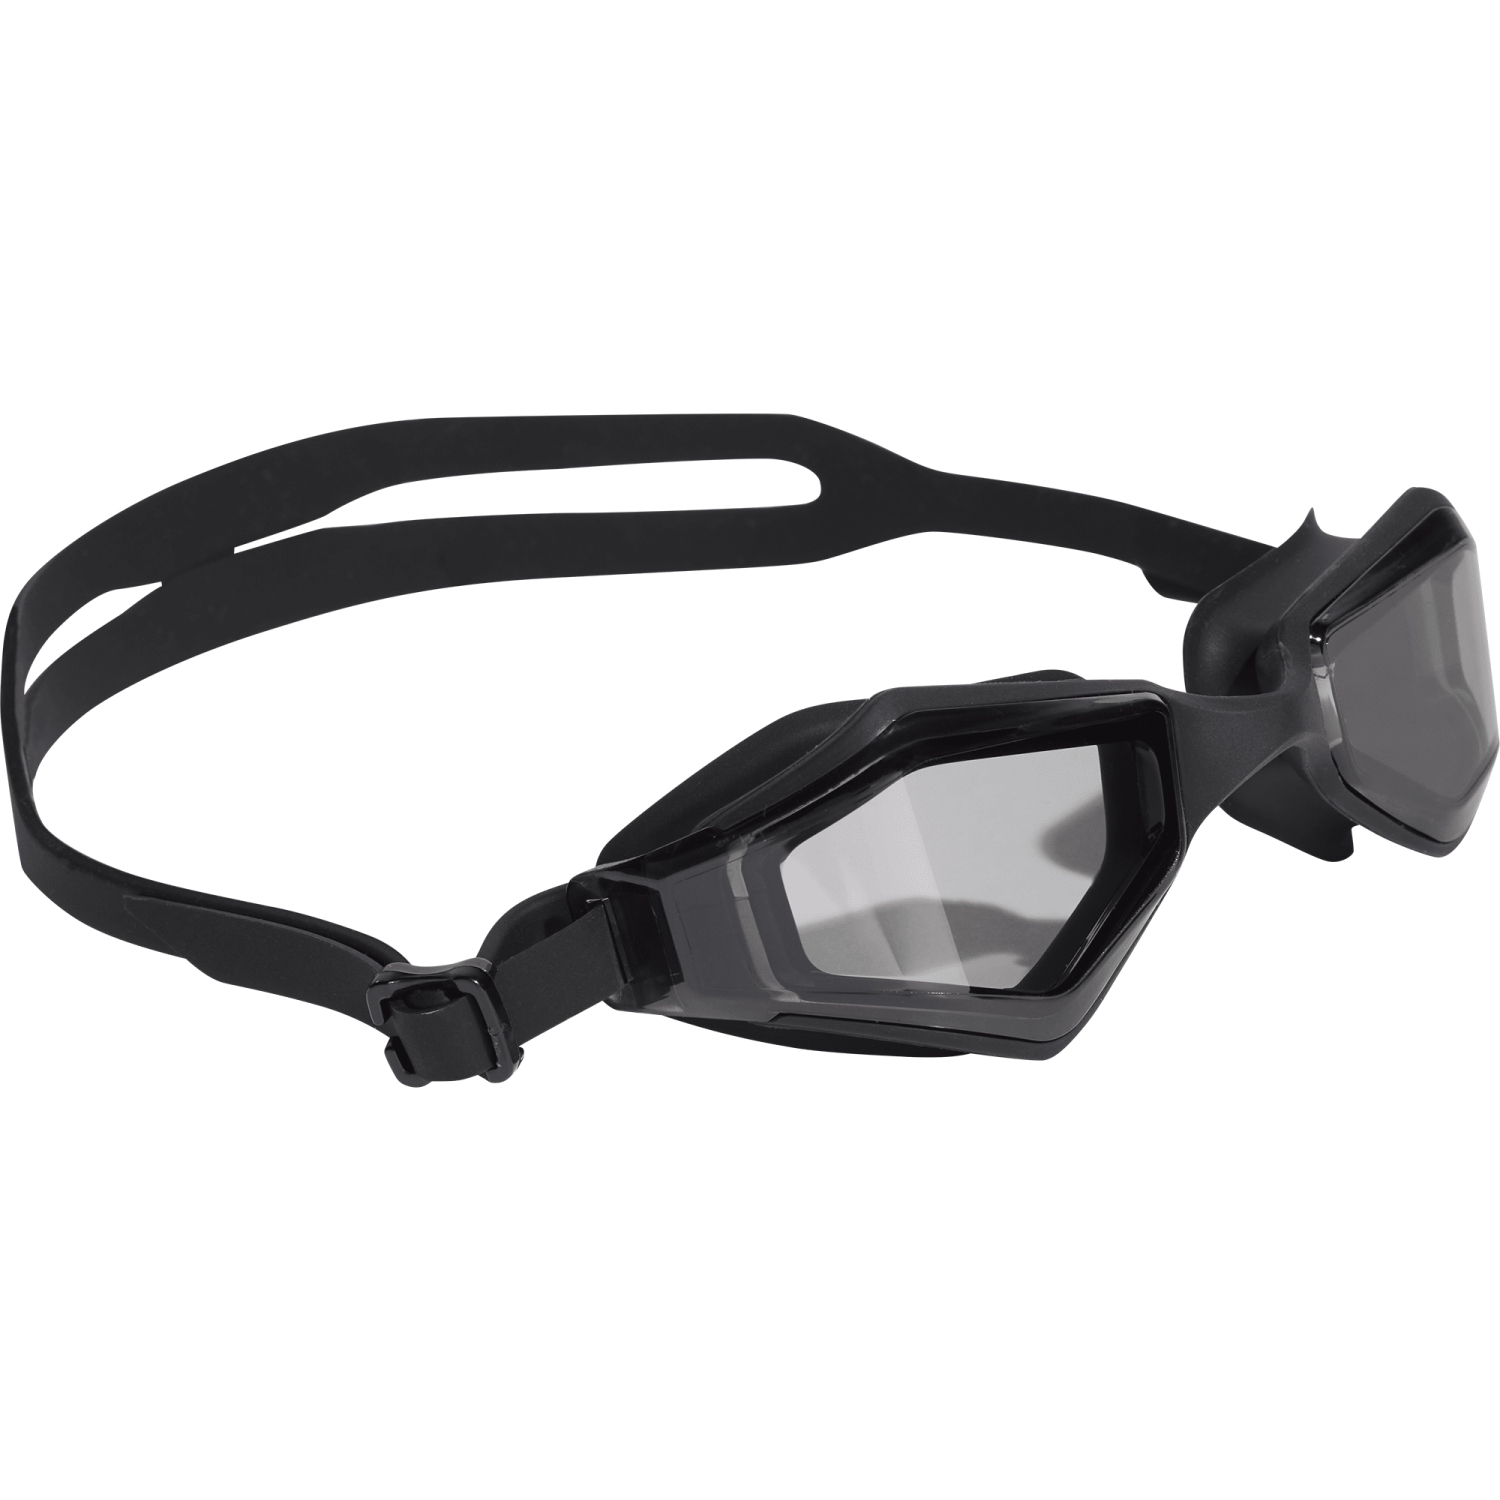 Productfoto van adidas Ripstream Soft Zwembril - black/carbon IK9657 - smoke lenses